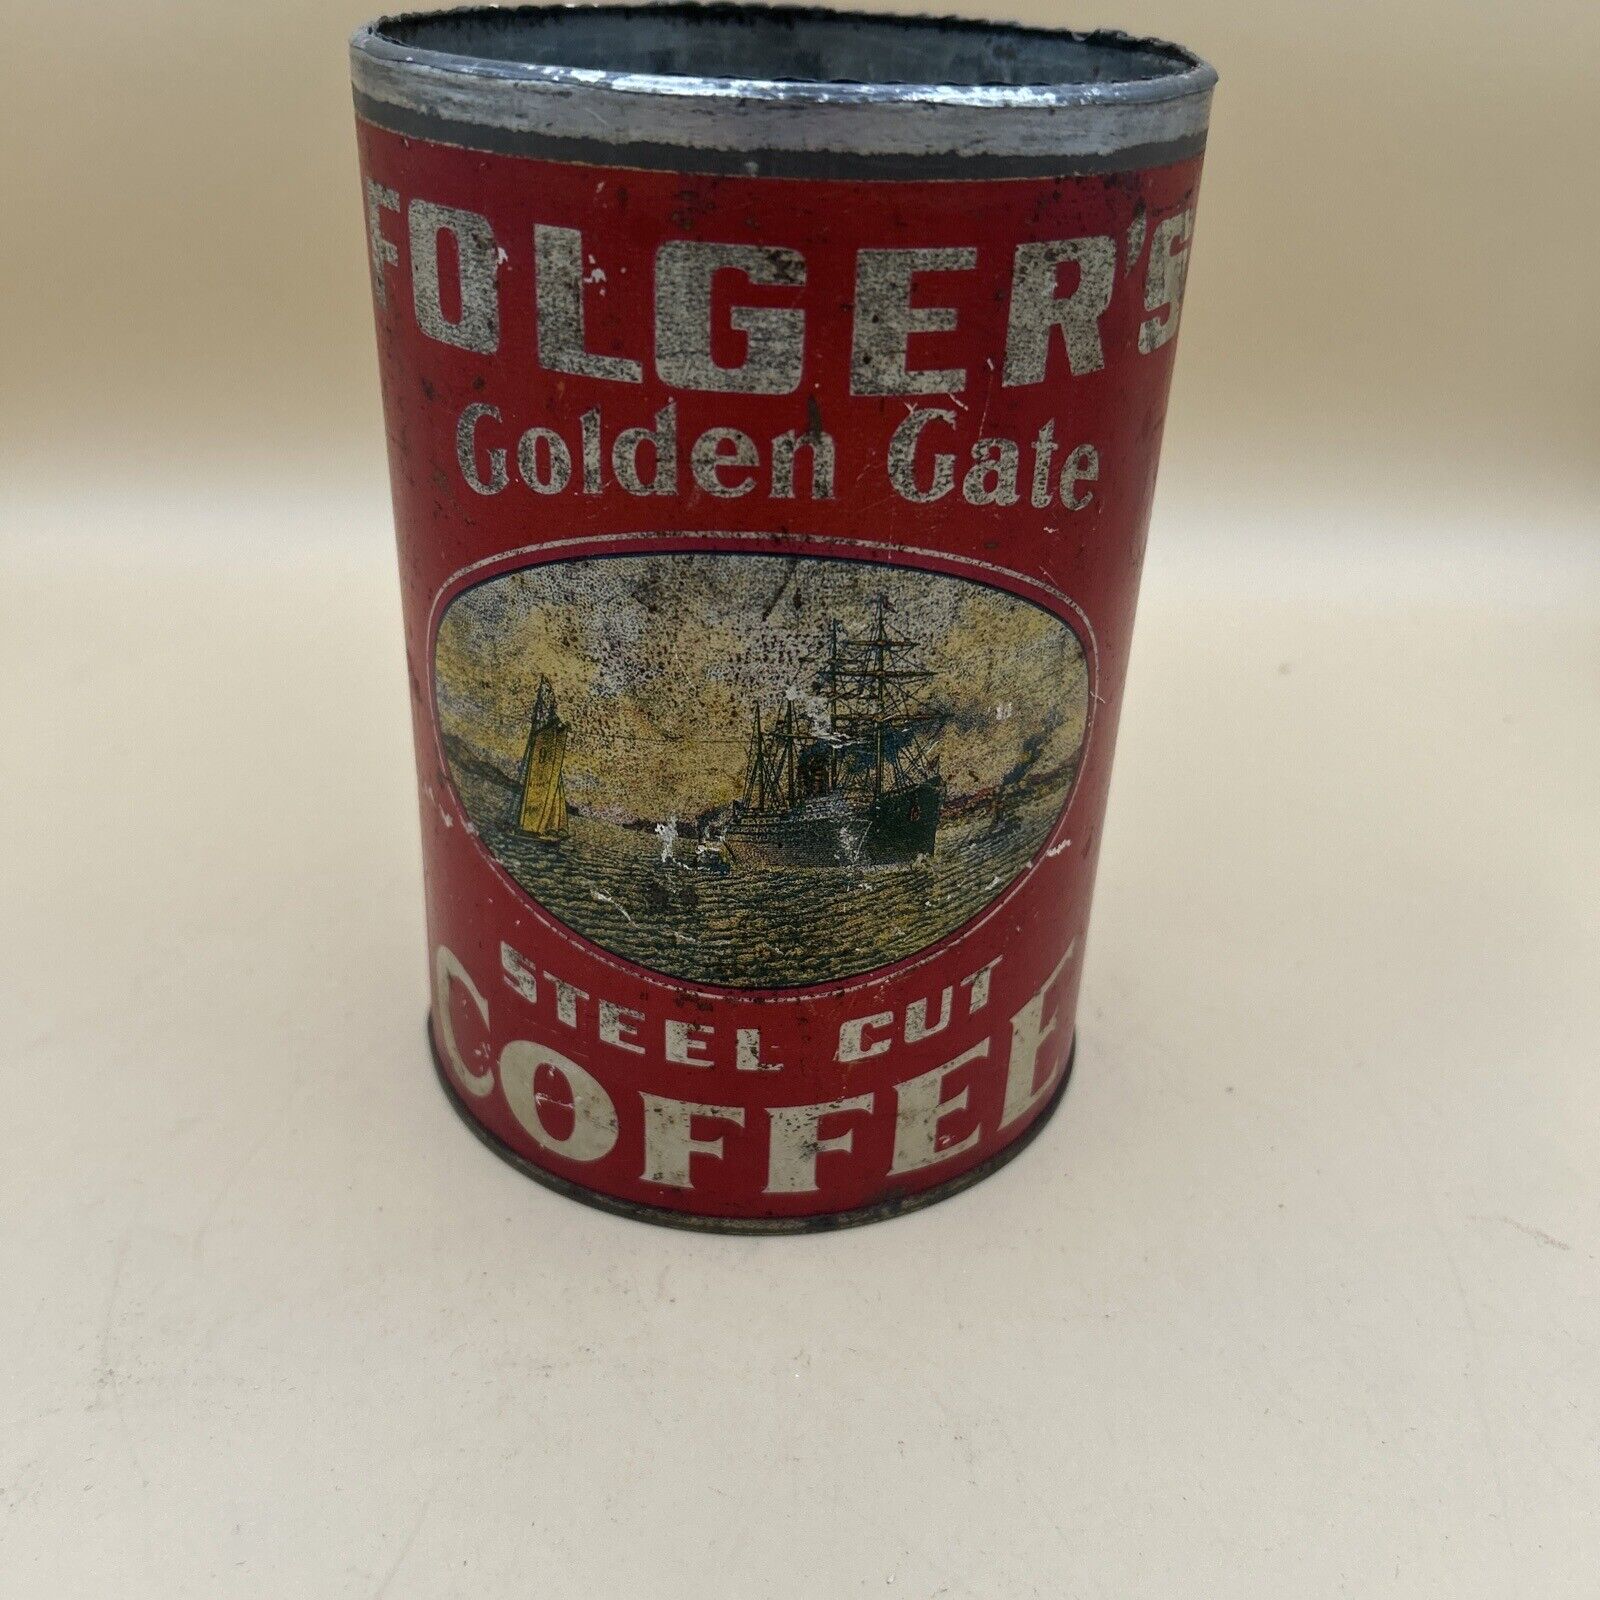 Vintage Folgers Golden Gate Steel cut Coffee tin. 2 lb. net weight  7\